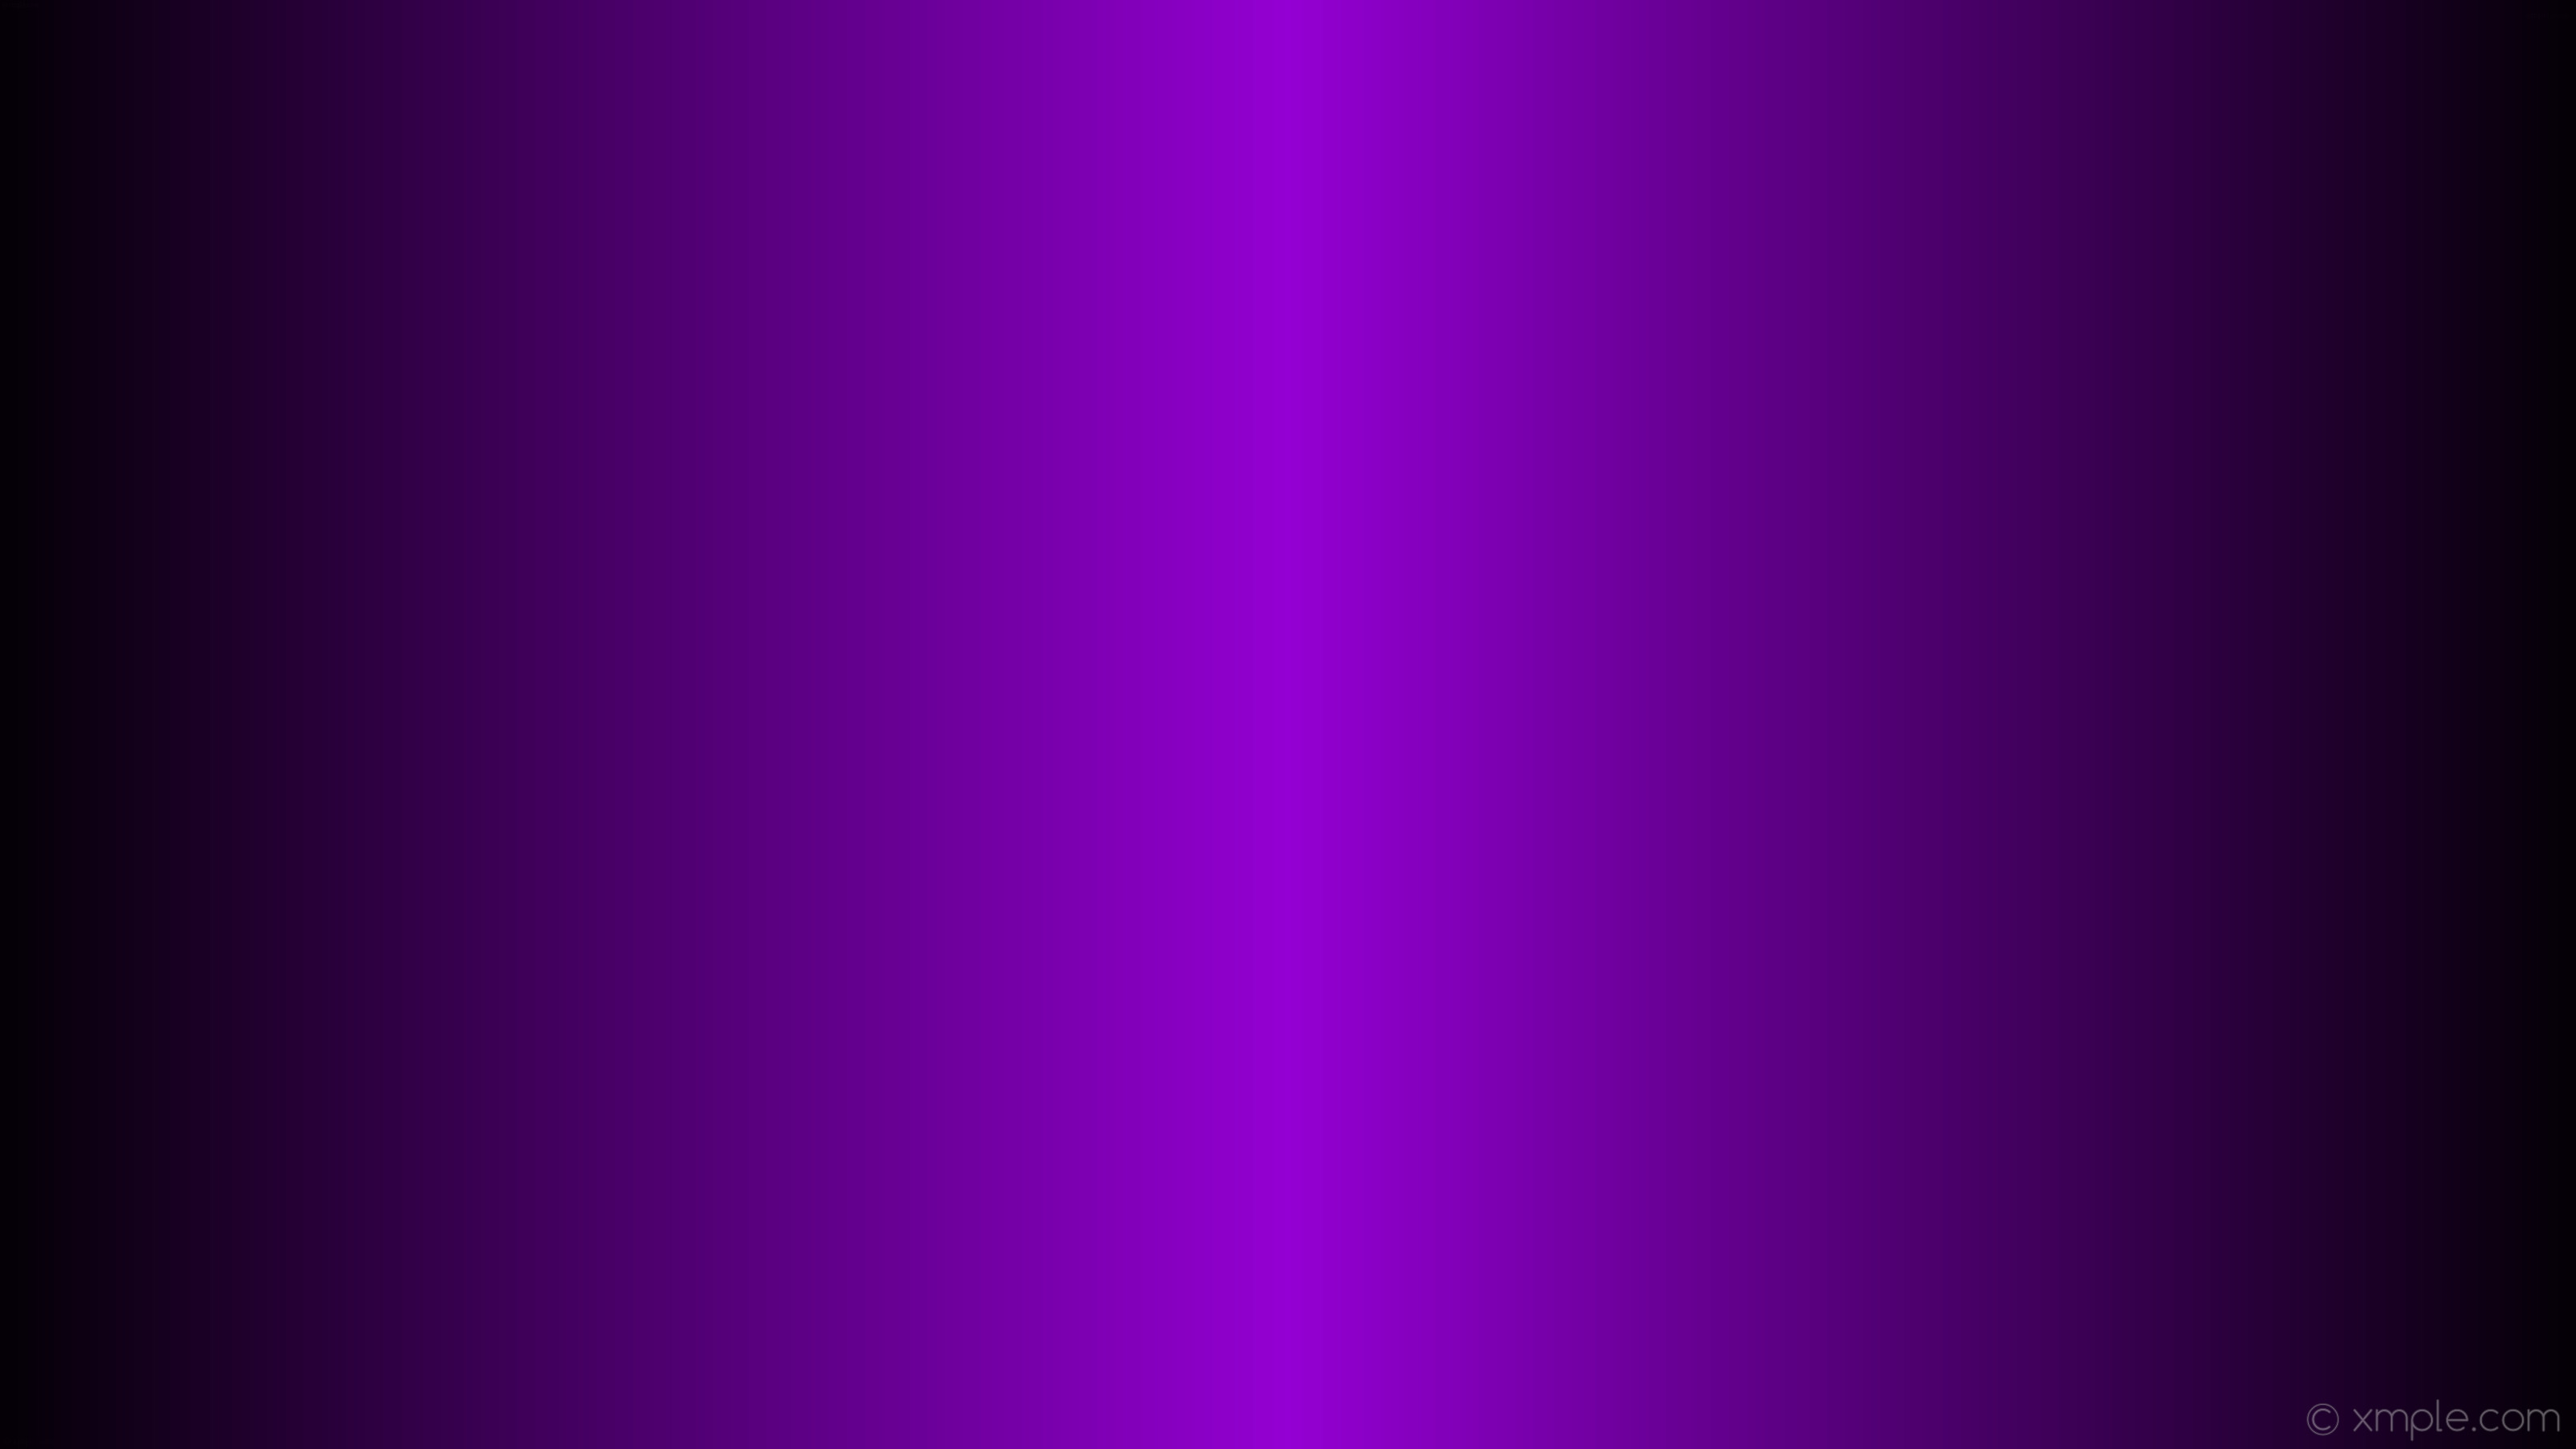 Â - Metallic Shiny Purple Background - HD Wallpaper 